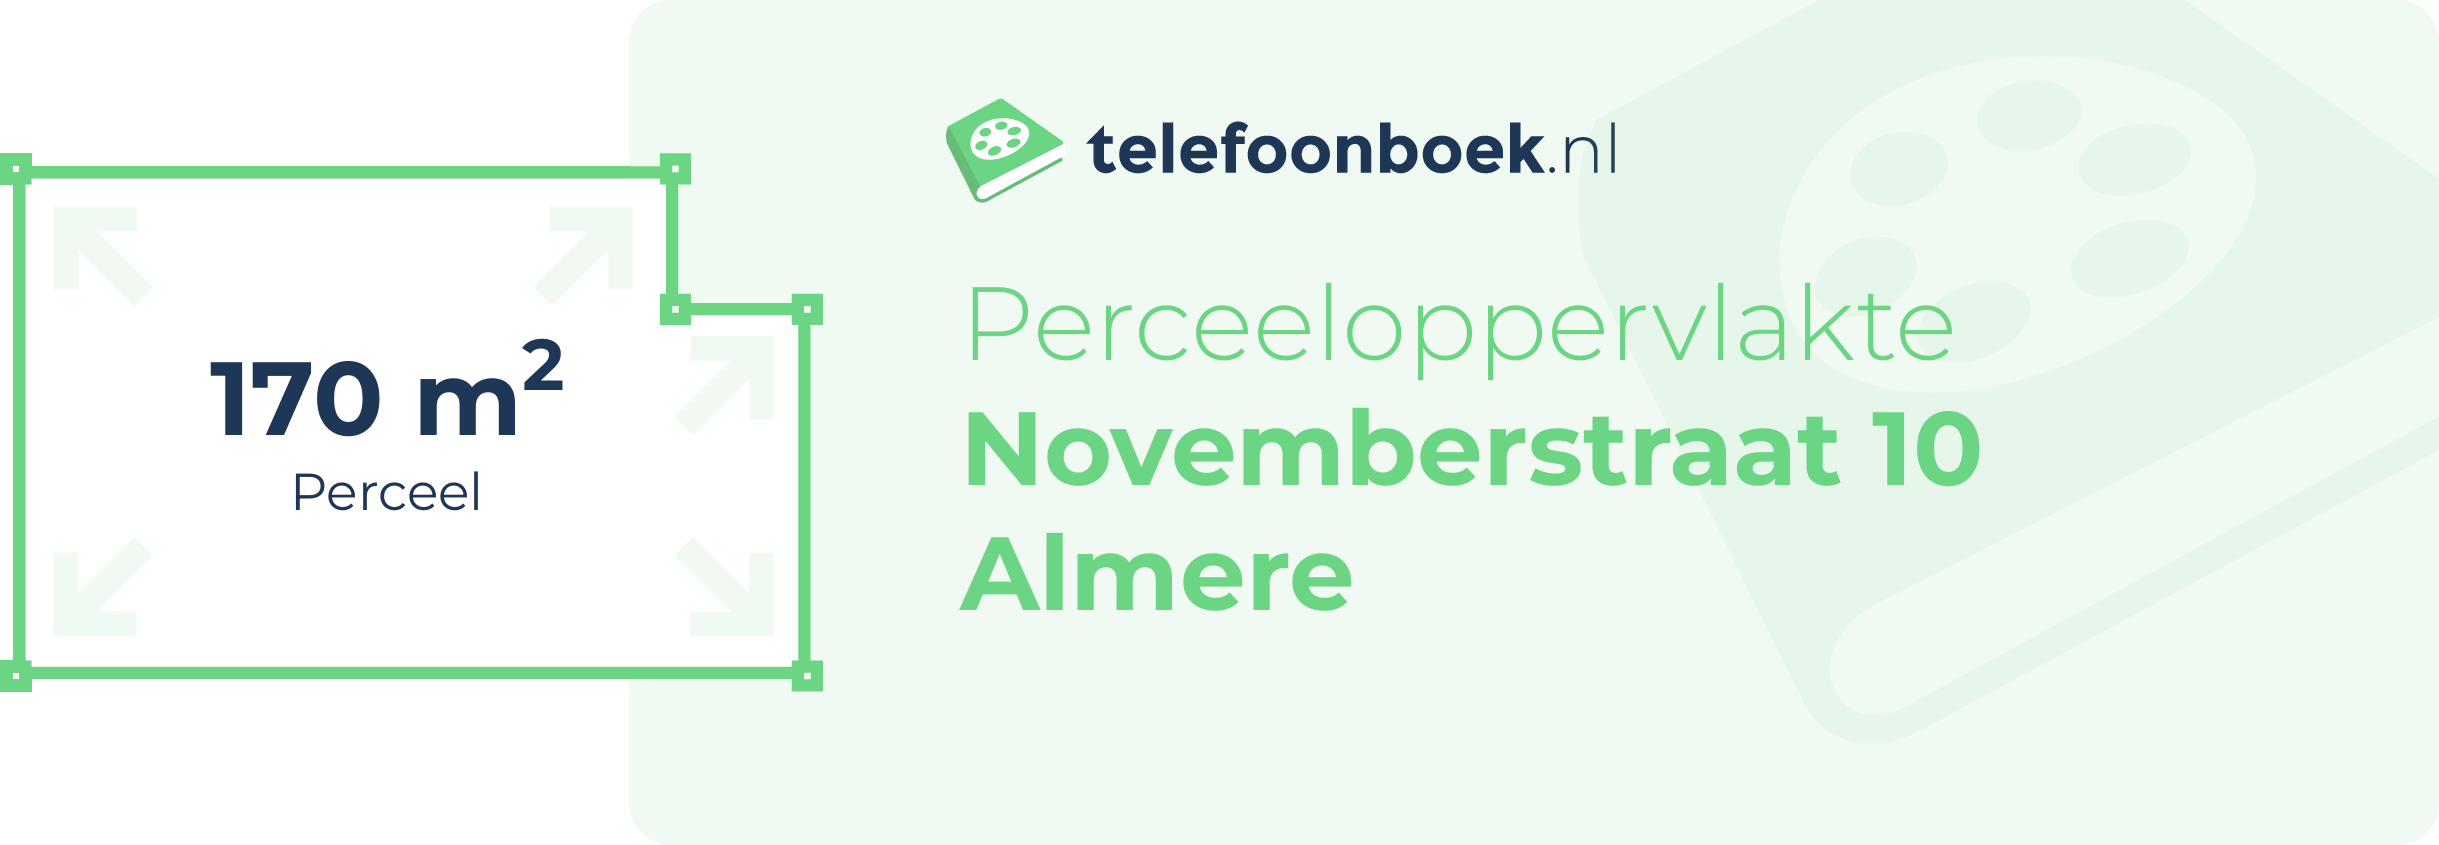 Perceeloppervlakte Novemberstraat 10 Almere